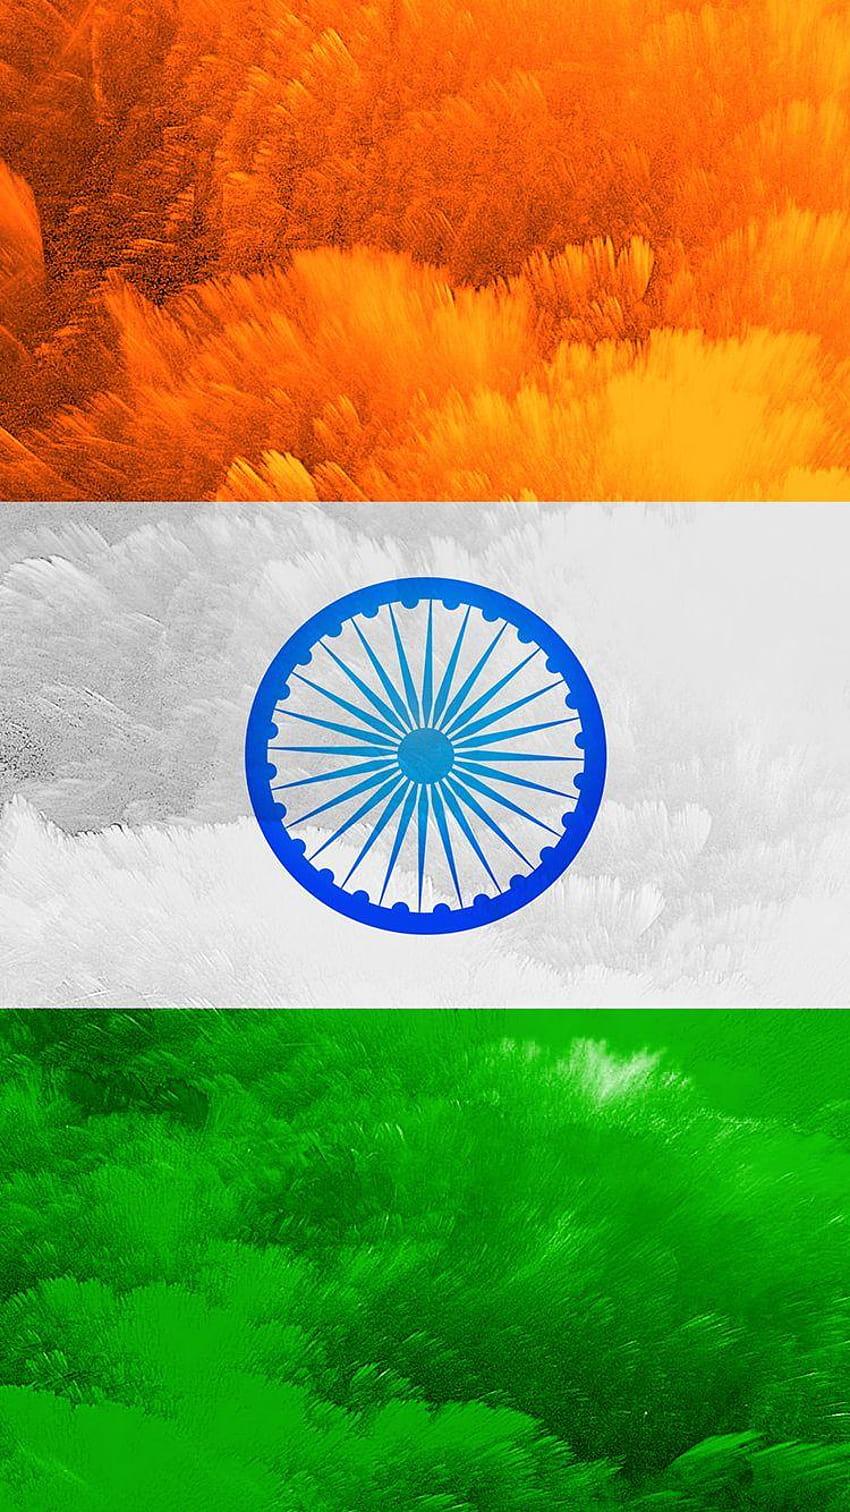 4, bandera india móvil fondo de pantalla del teléfono